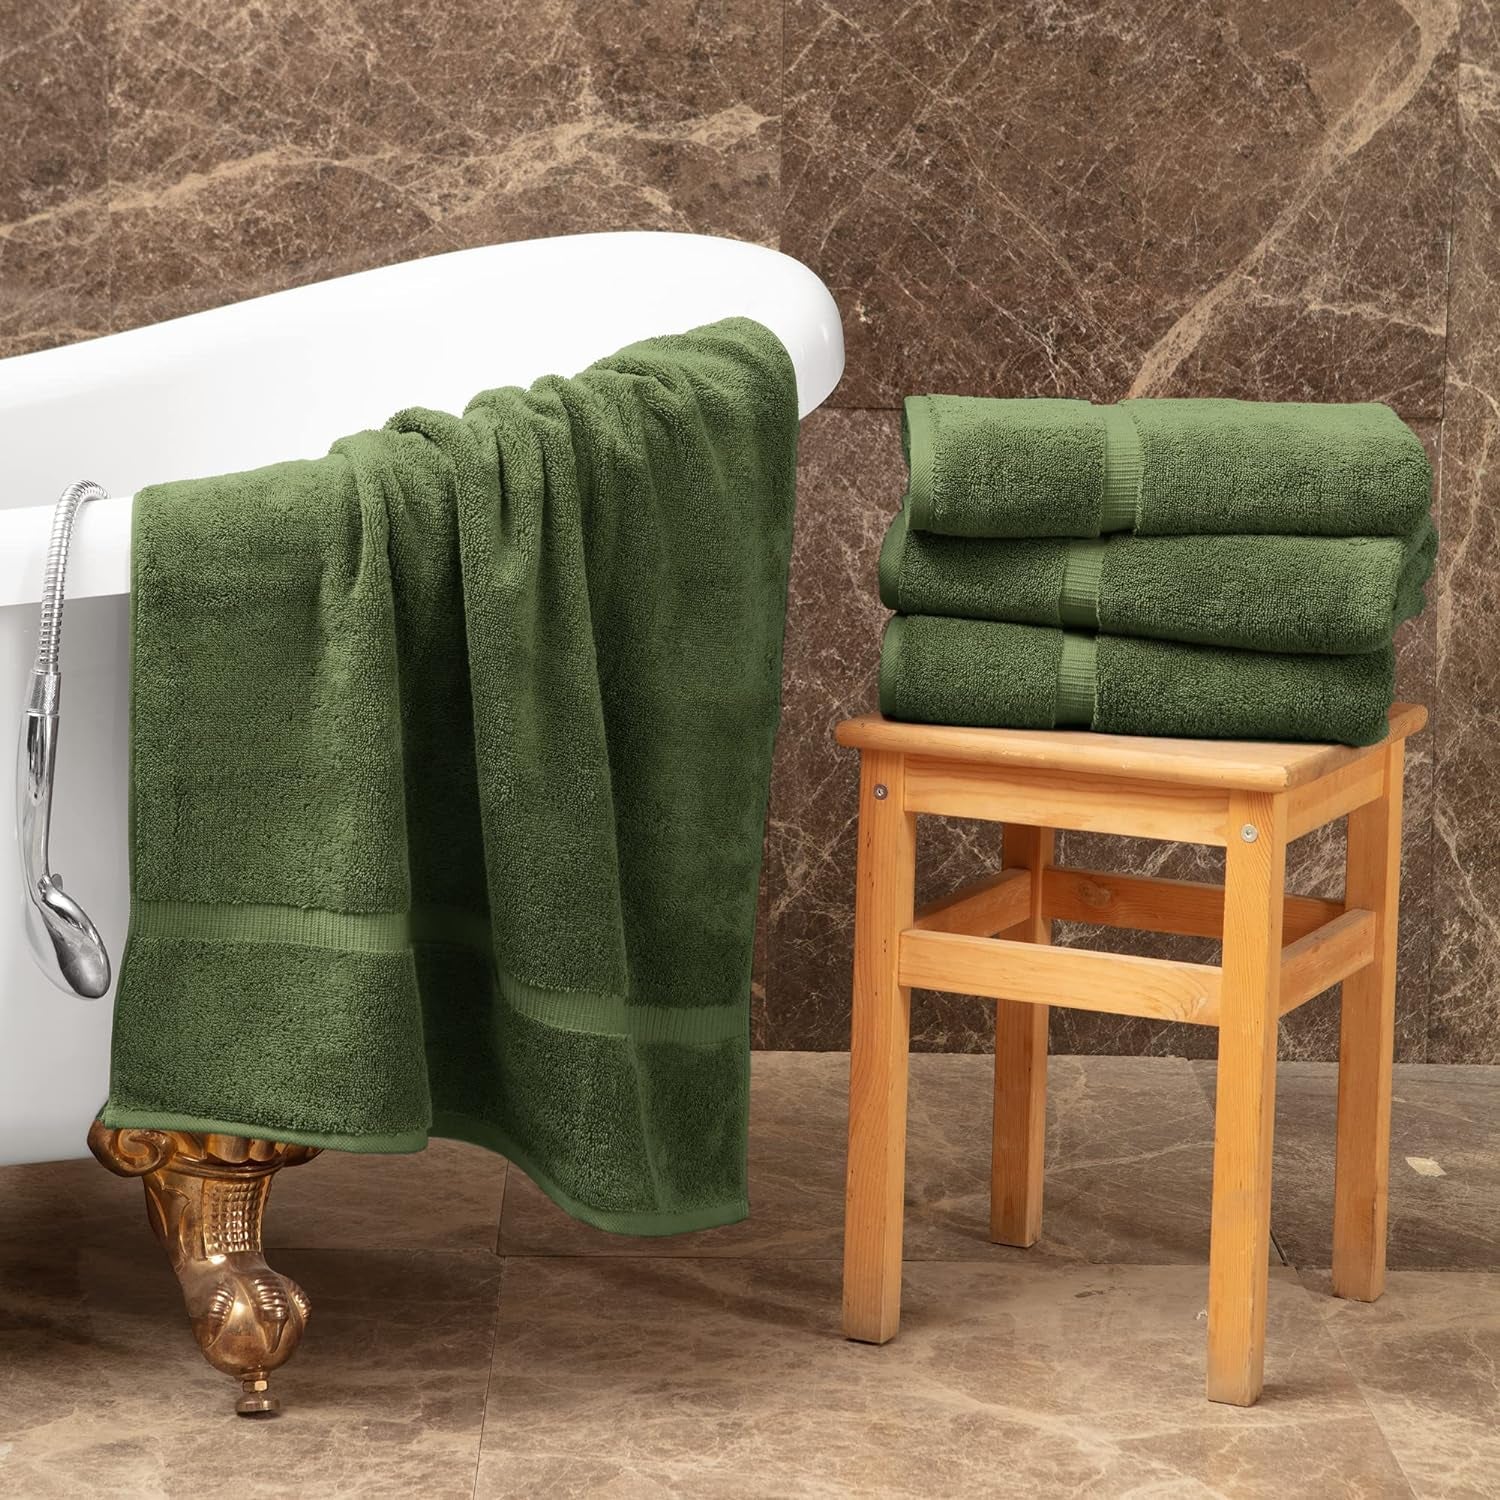 Premium Turkish Cotton Super Soft and Absorbent Towels (4-Piece Bath Towels, Moss Green)